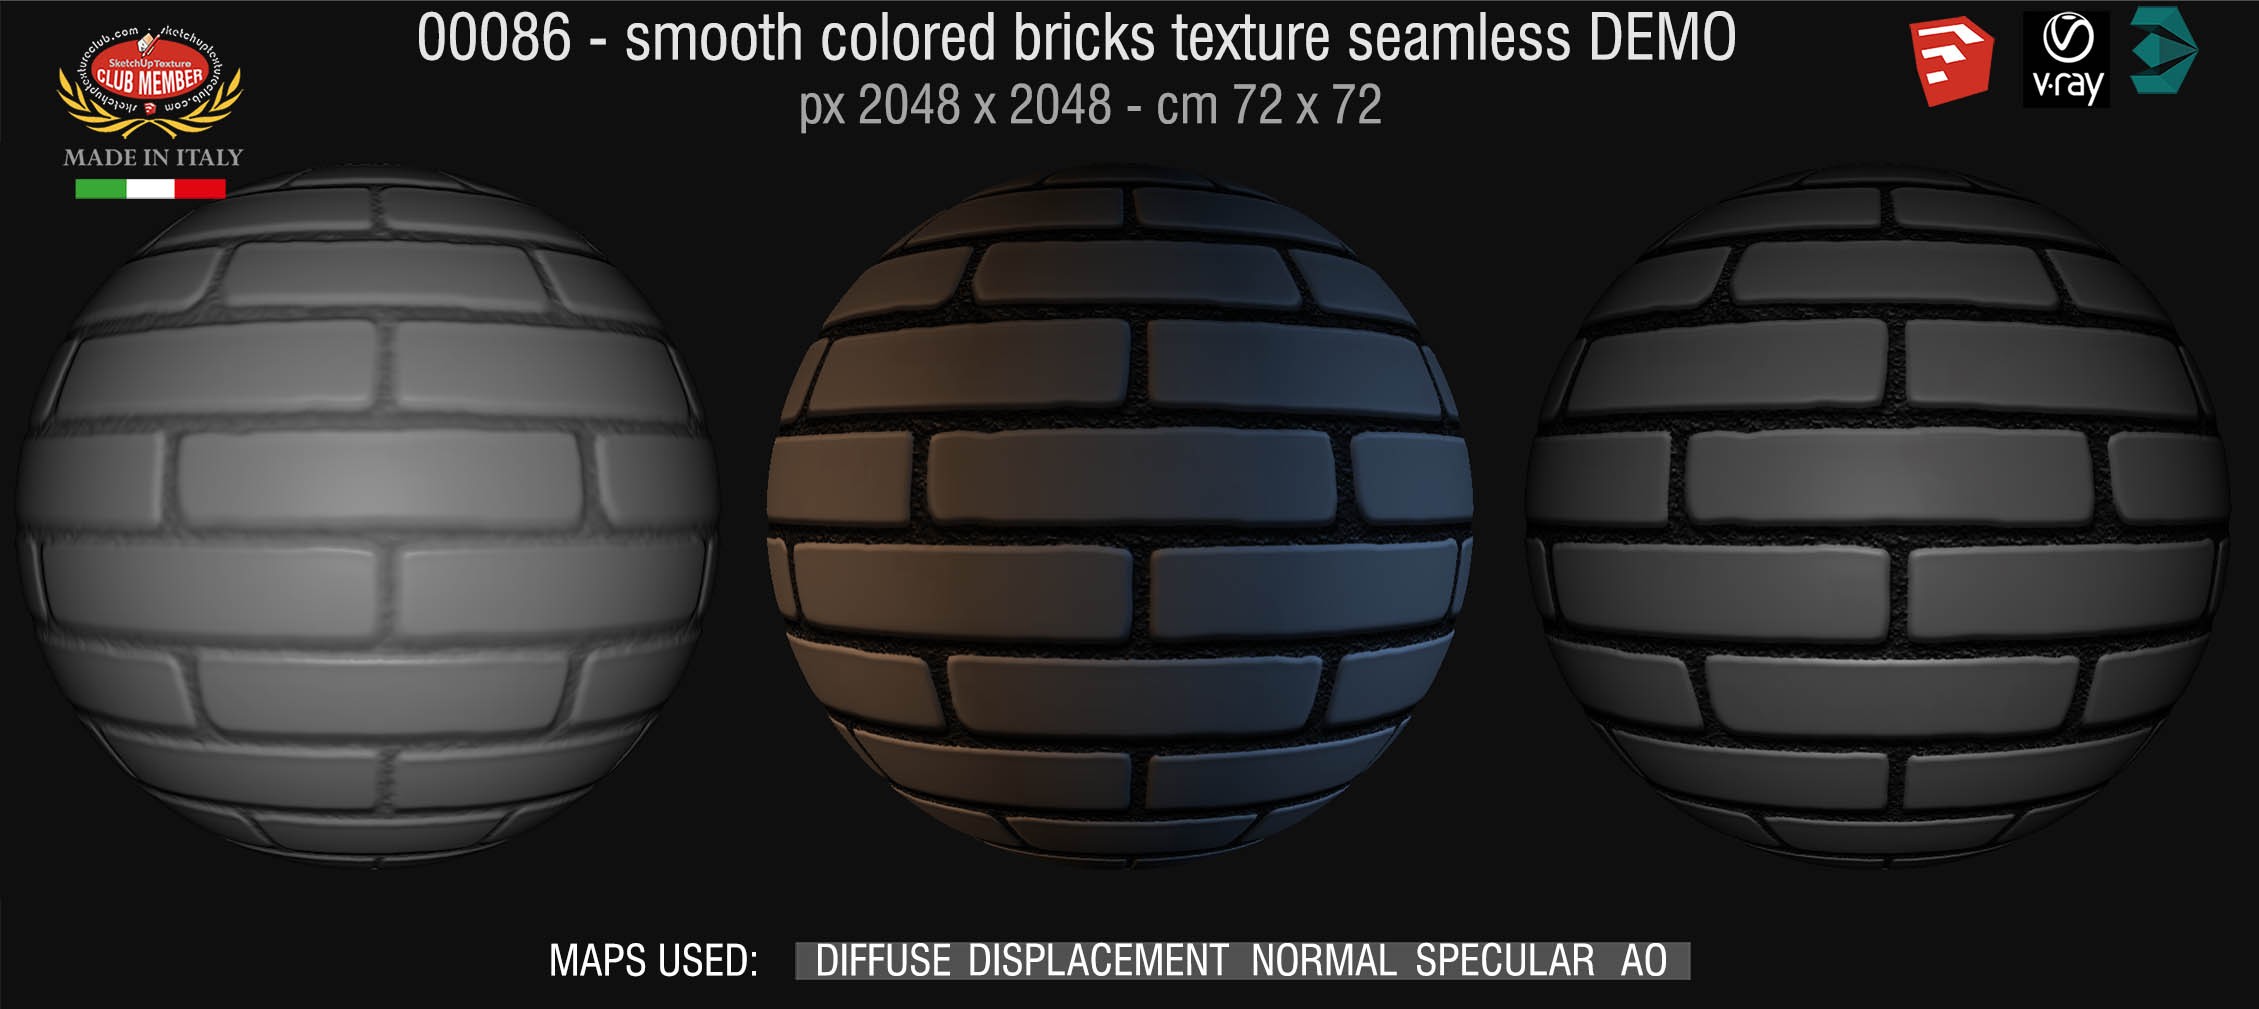 00086 smooth colored bricks texture seamless + maps DEMO